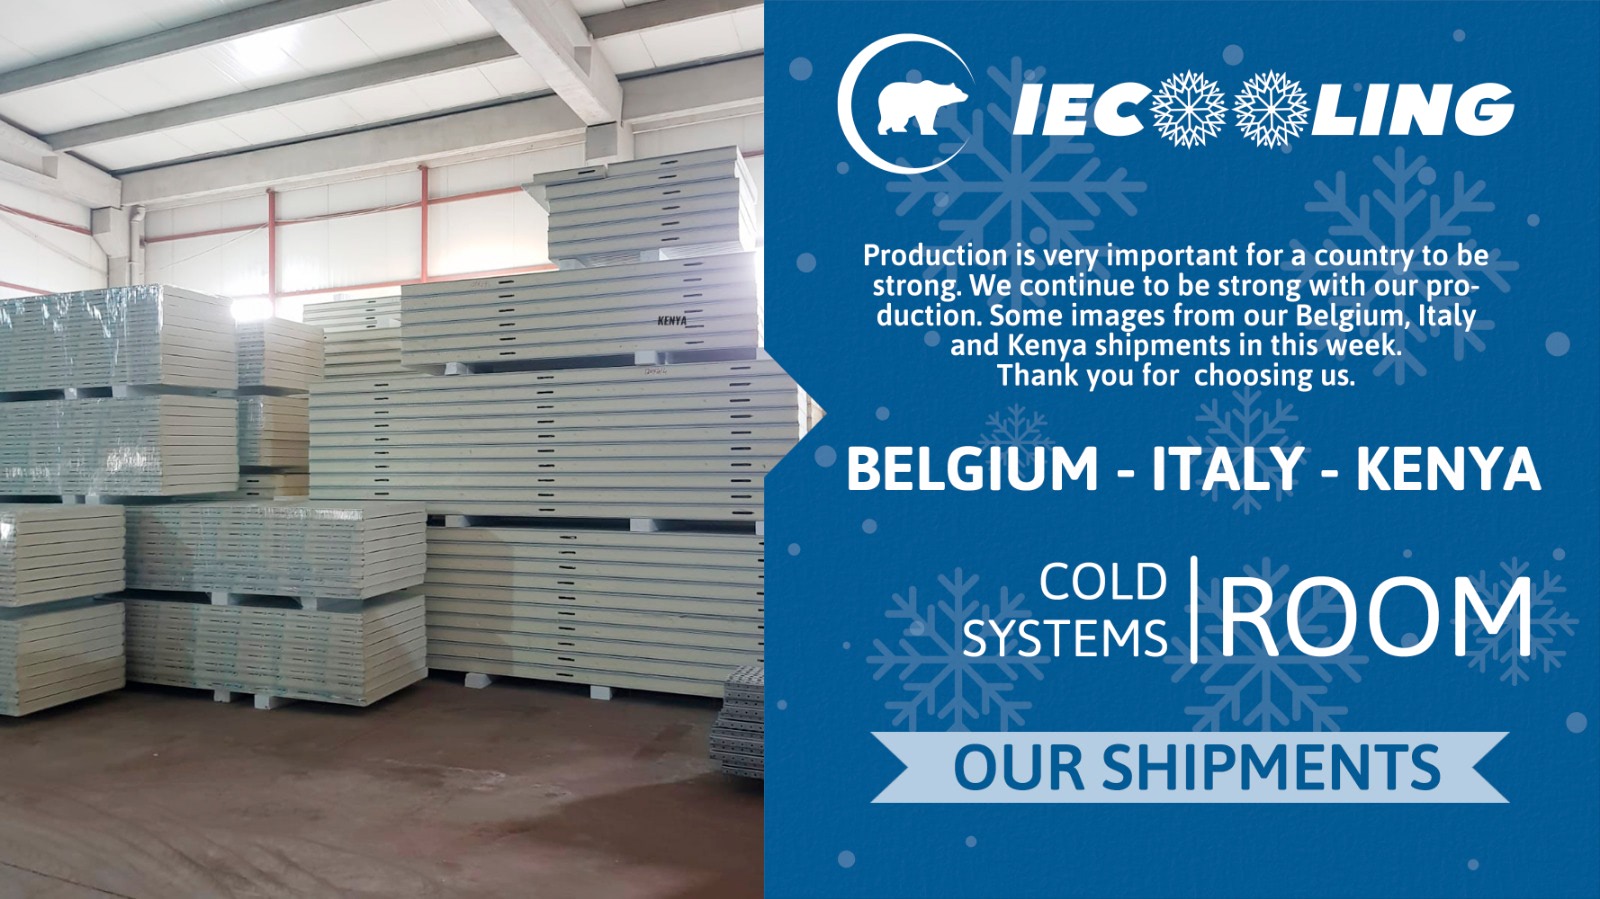 Belgium, Italy and Kenya shipments